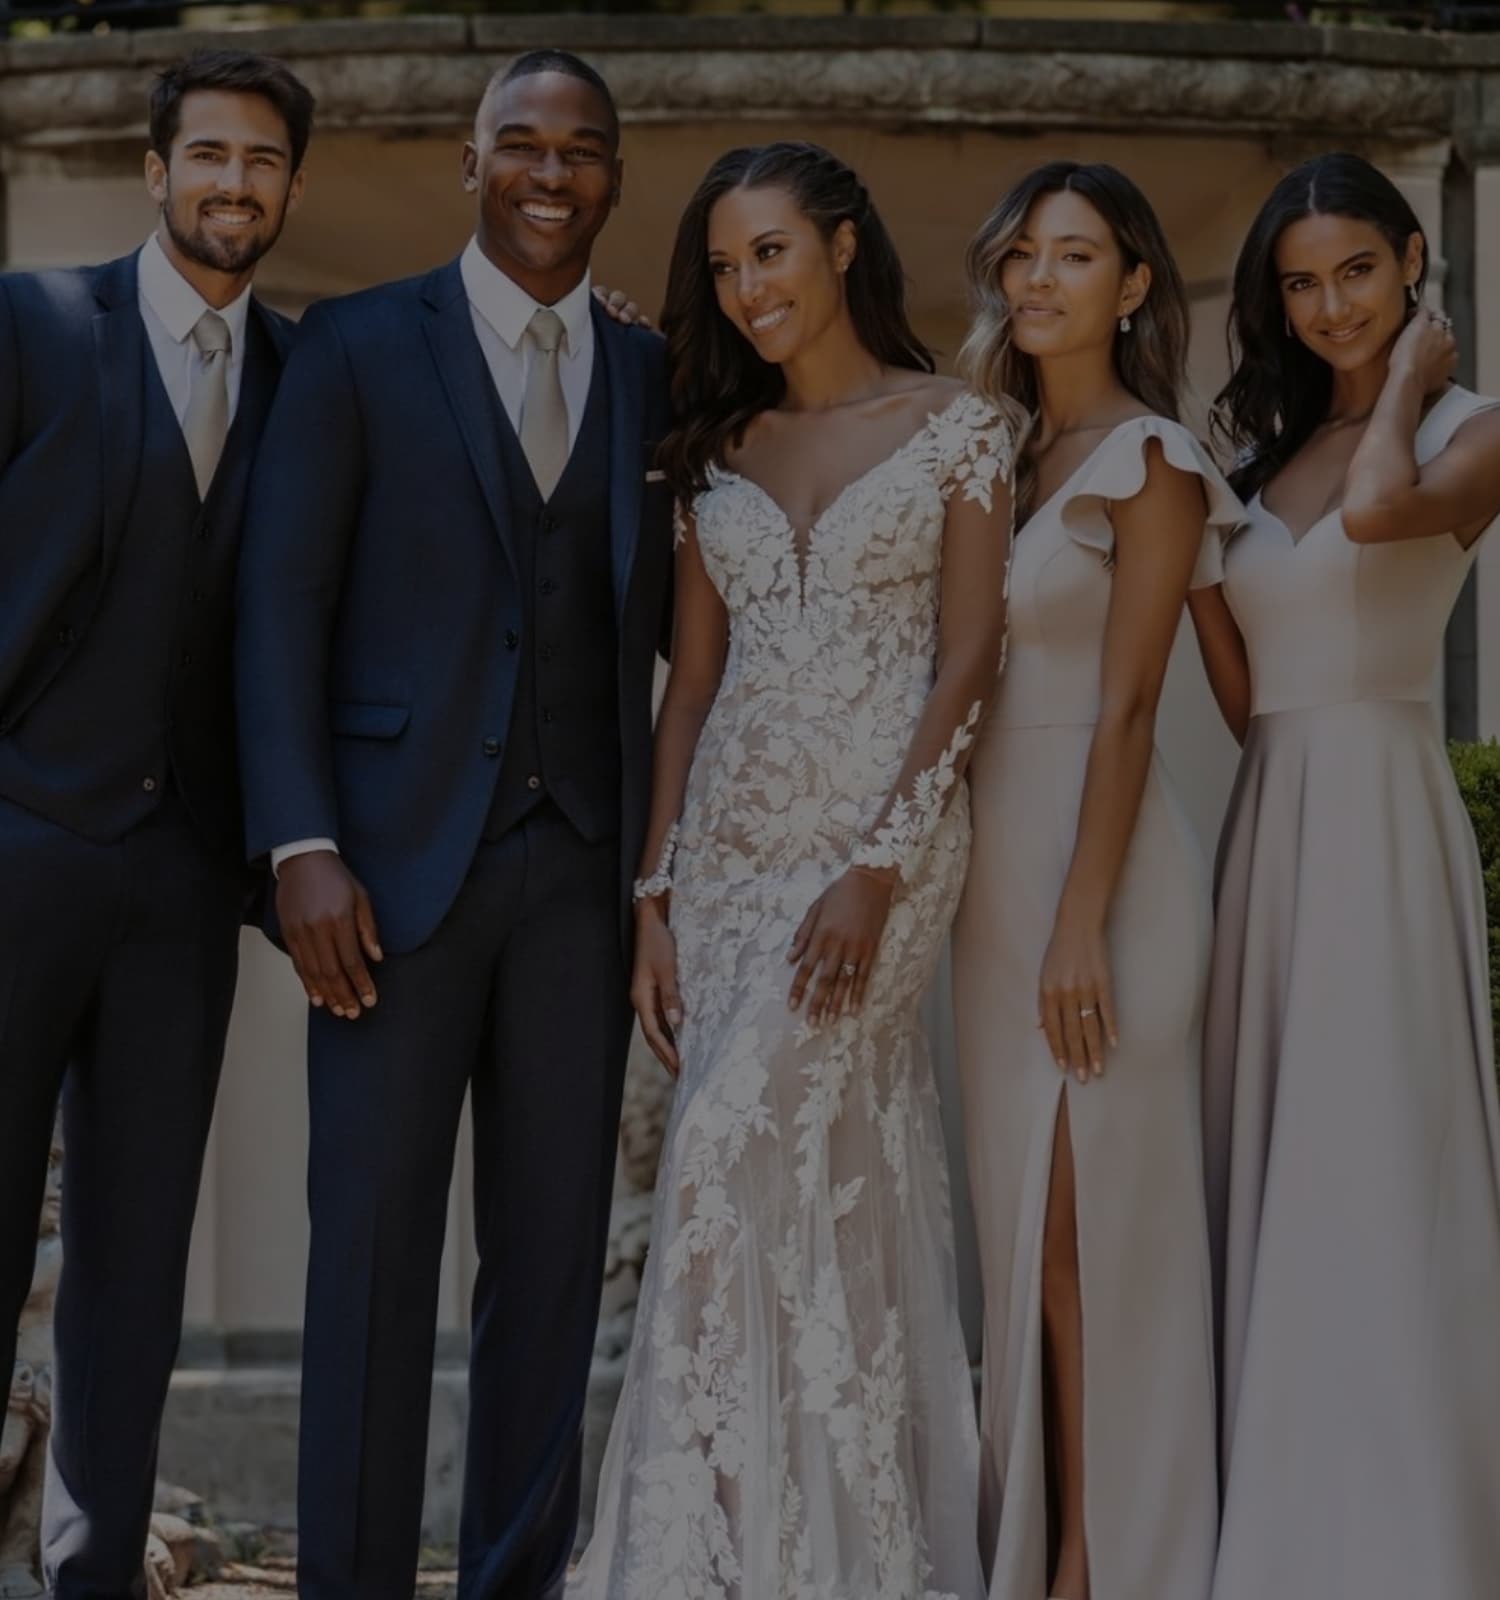 Photo of Michelle's Bridal & Tuxedo Bride, groom and bridesmaids